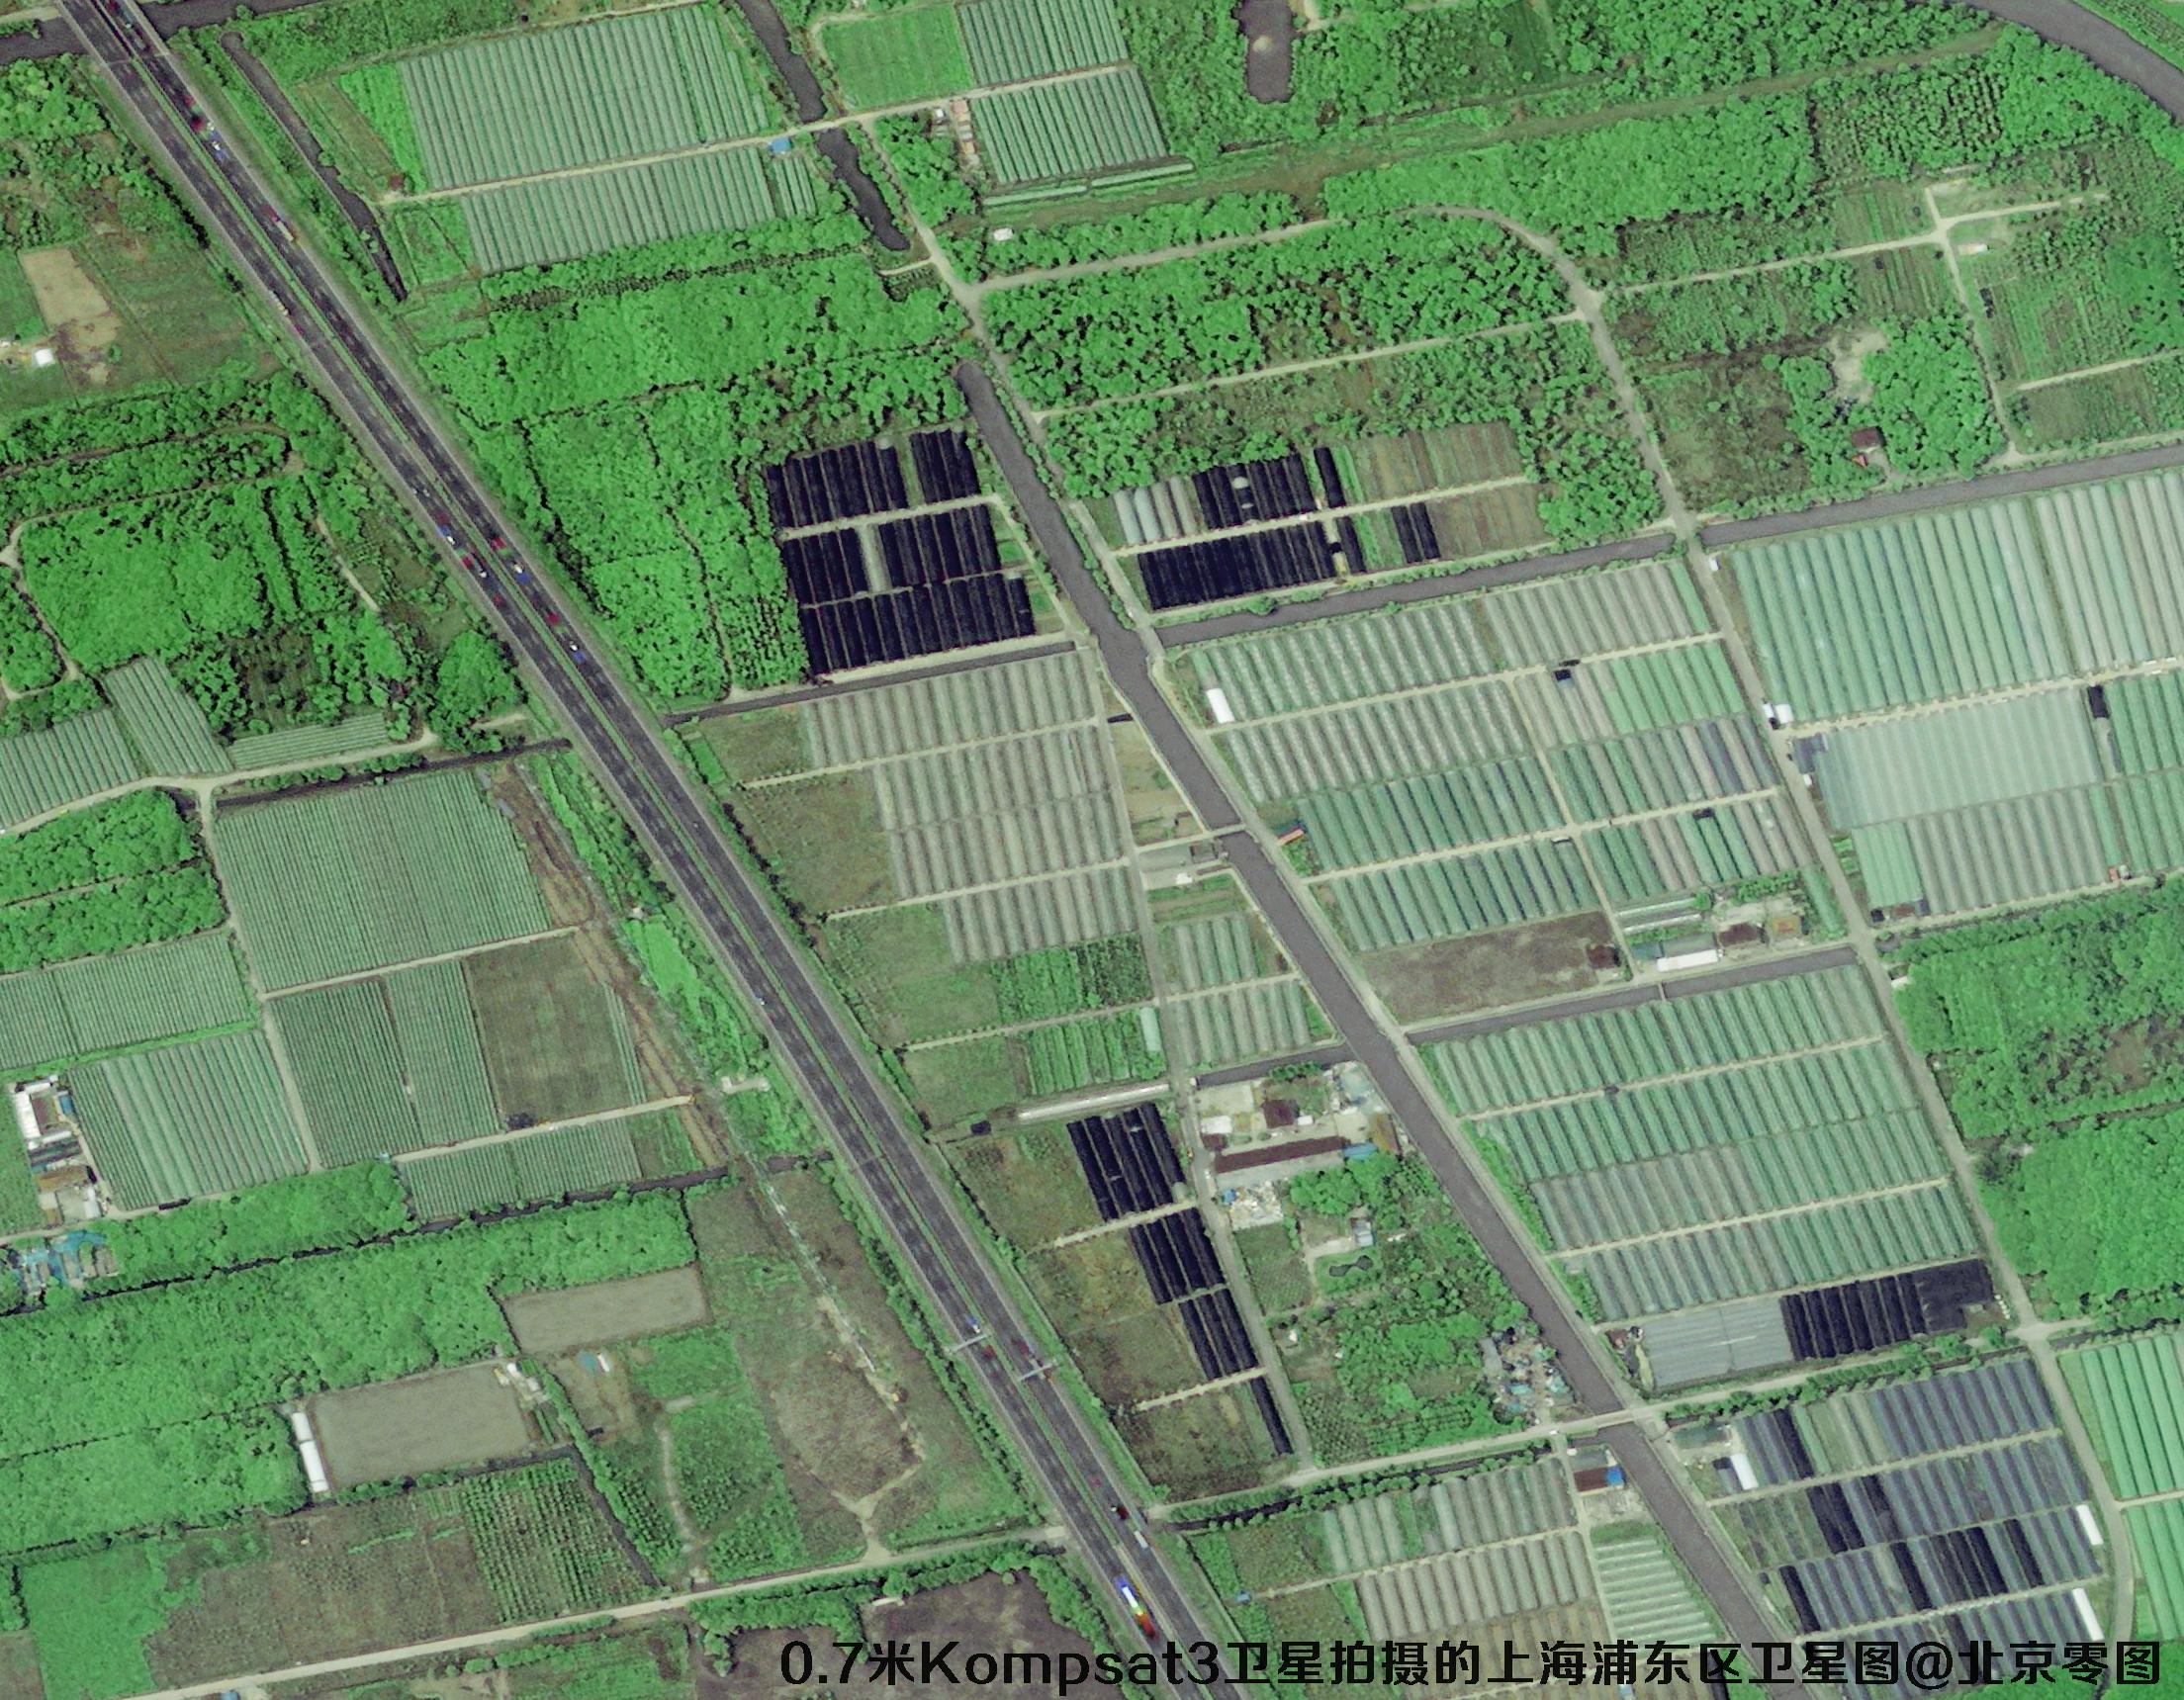 Kompsat3卫星拍摄的0.7米分辨率影像图片